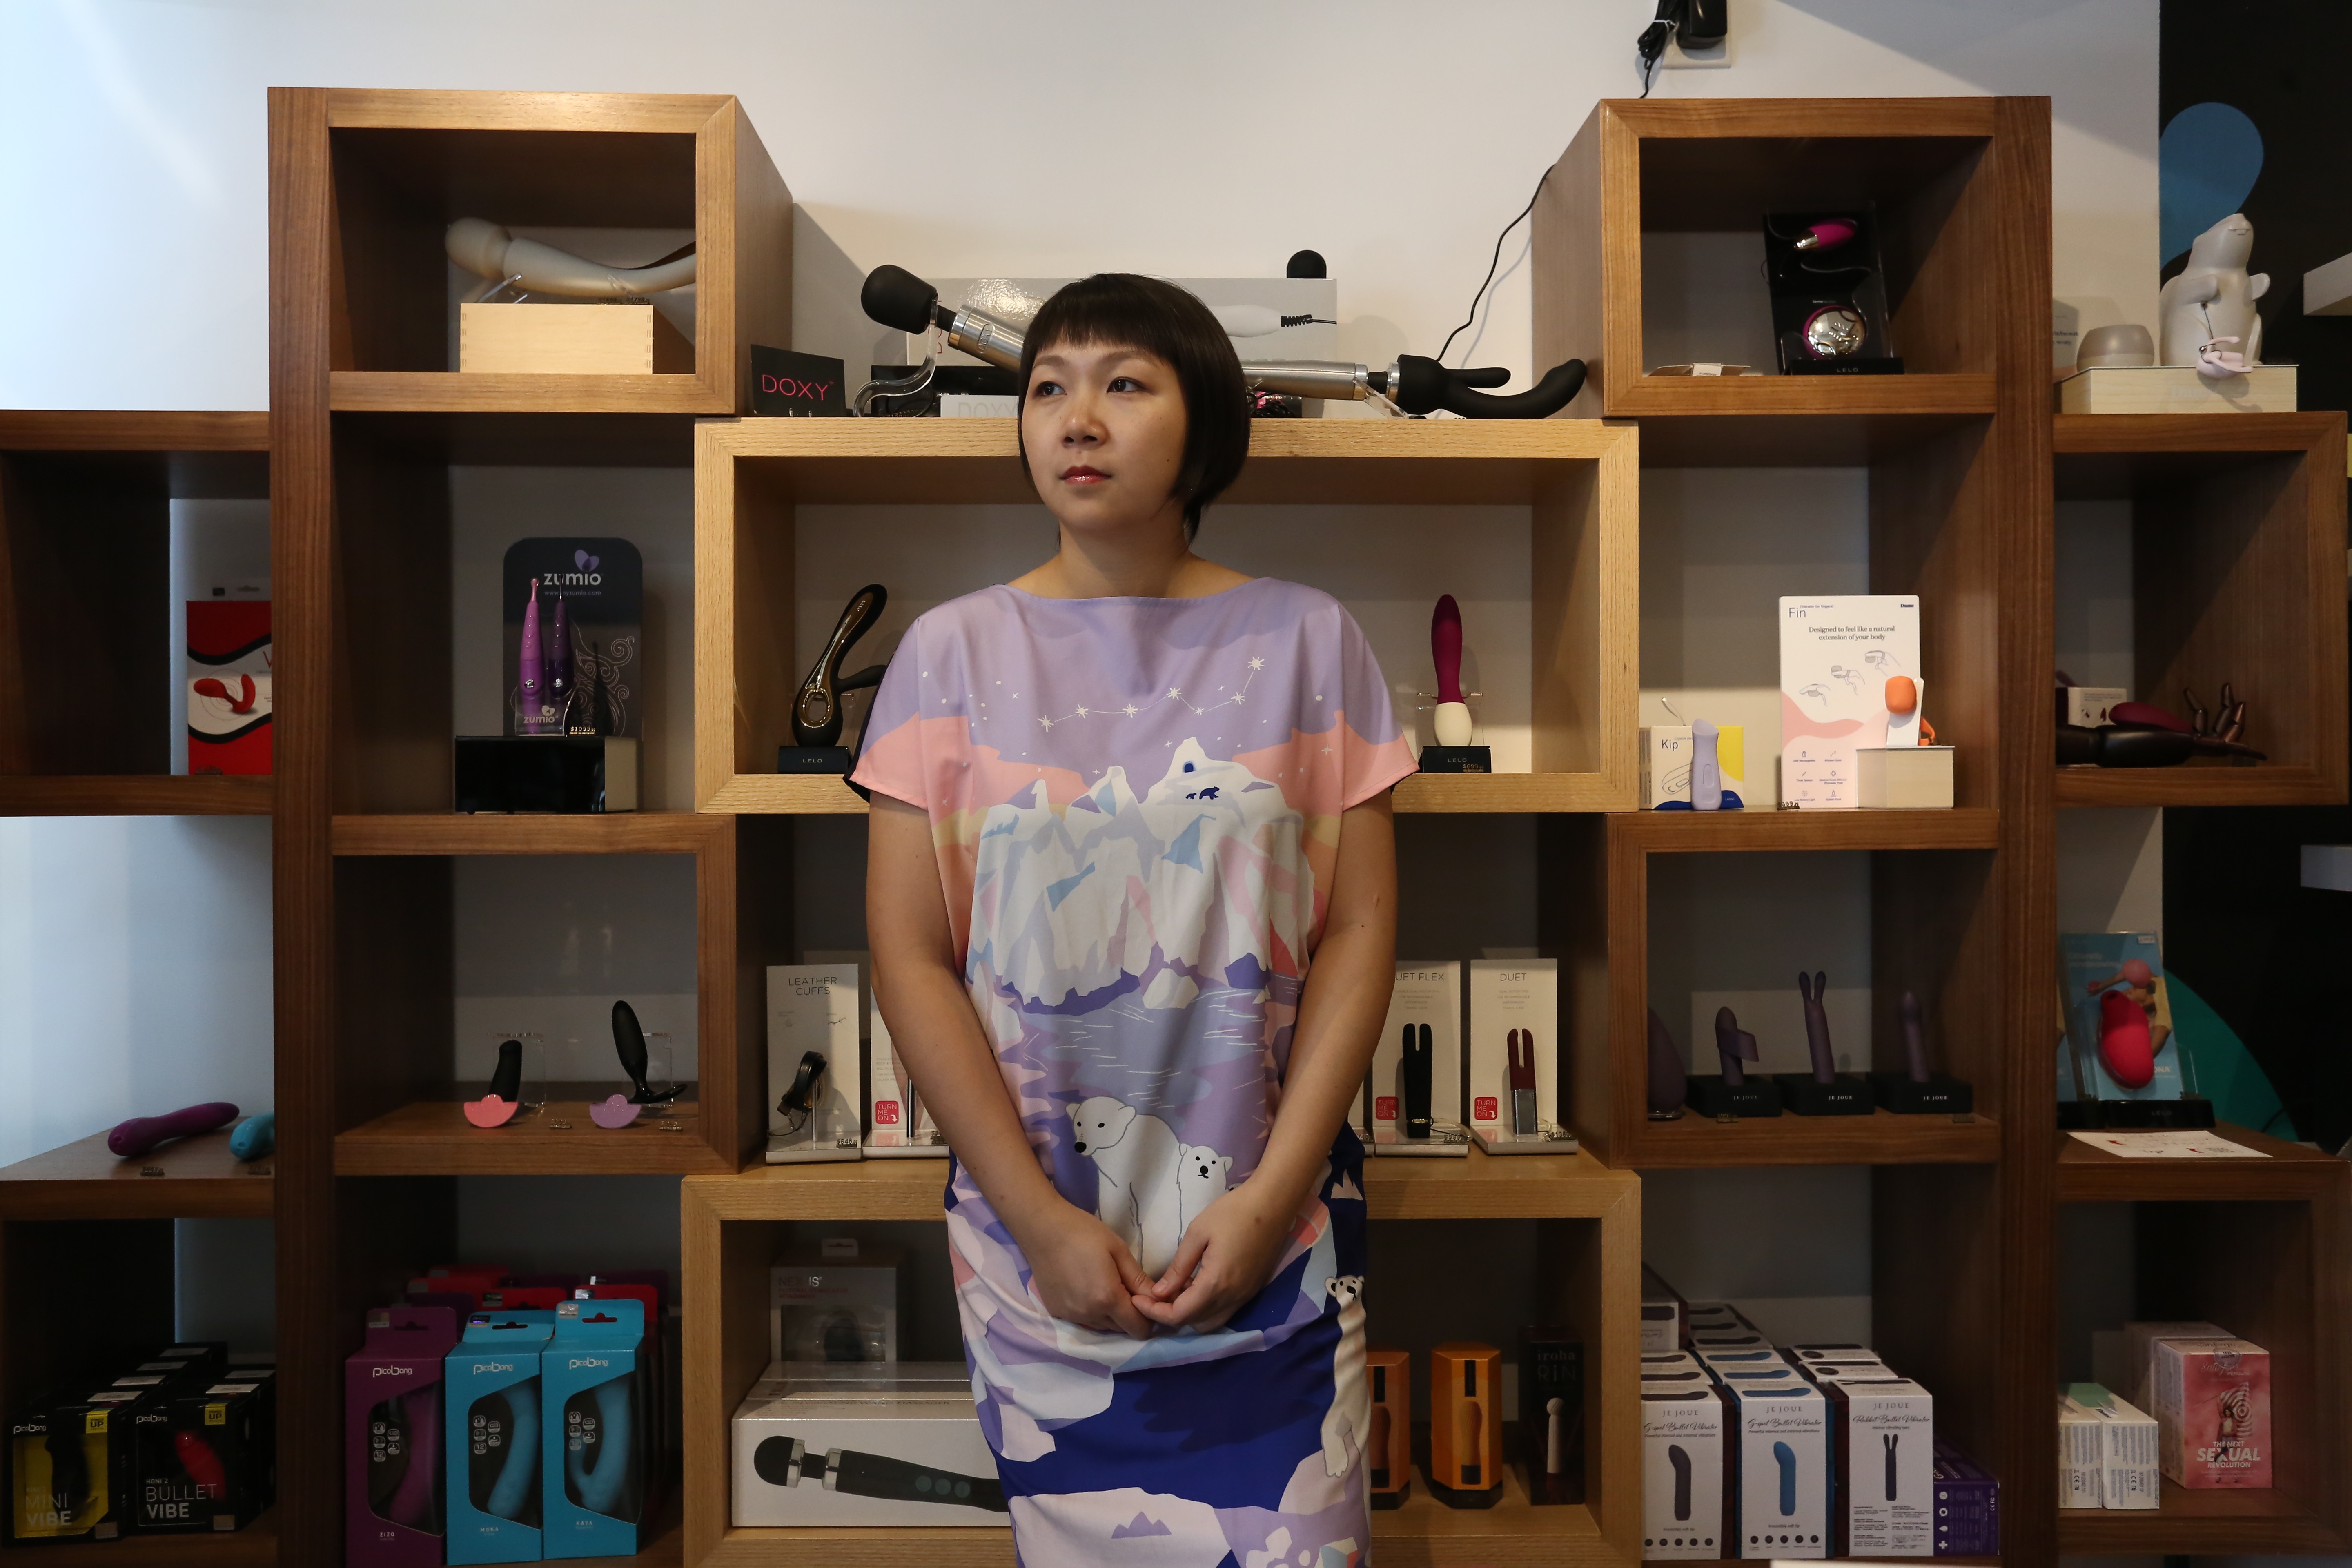 Interview owner of sex shop Sallystoys, Vera Lui Wing-hang in Tsim Sha Tsui. 20JUN19 SCMP / Jonathan Wong